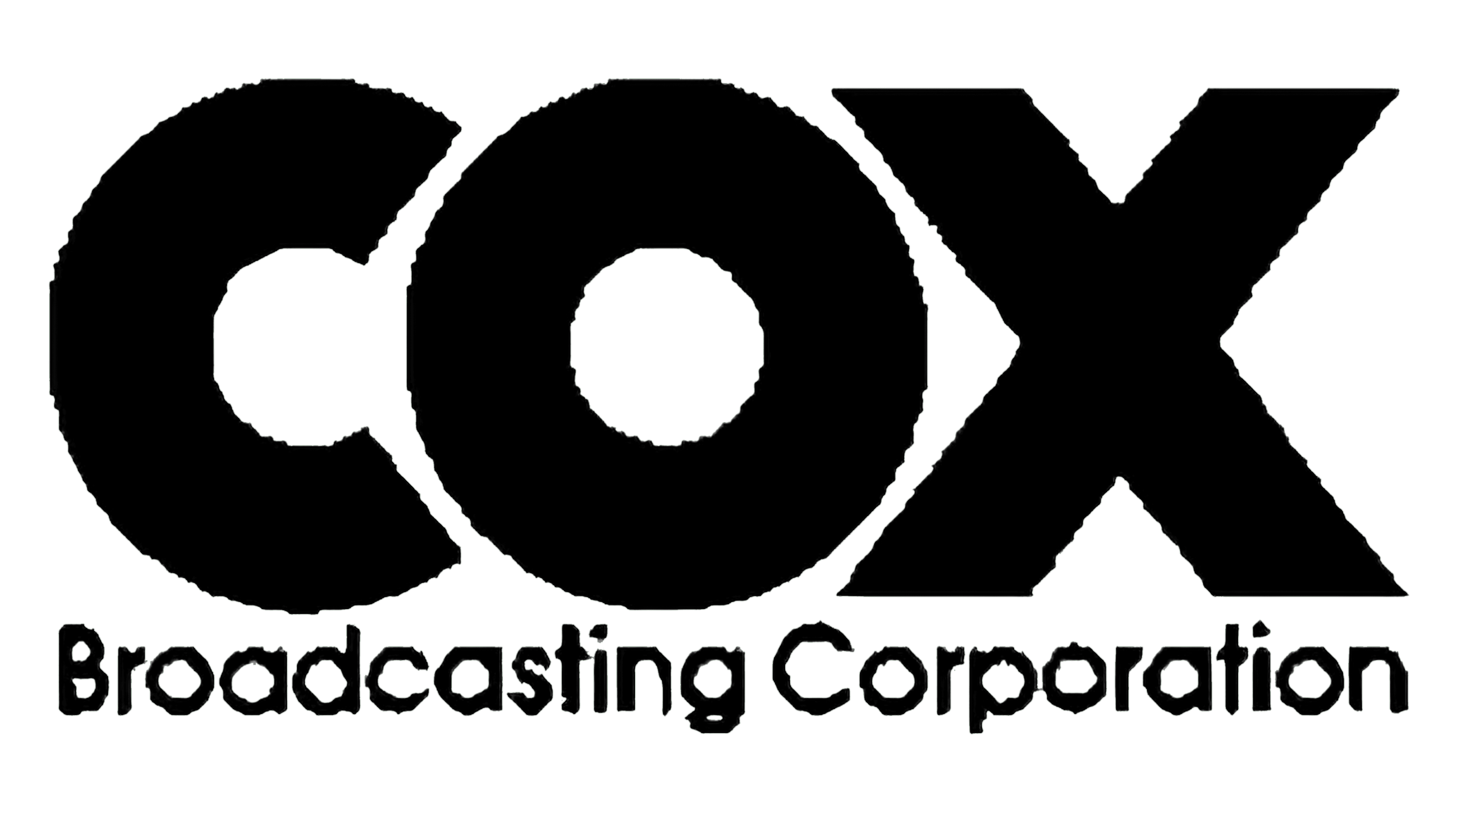 Cox broadcasting corporation sign 1970 1979